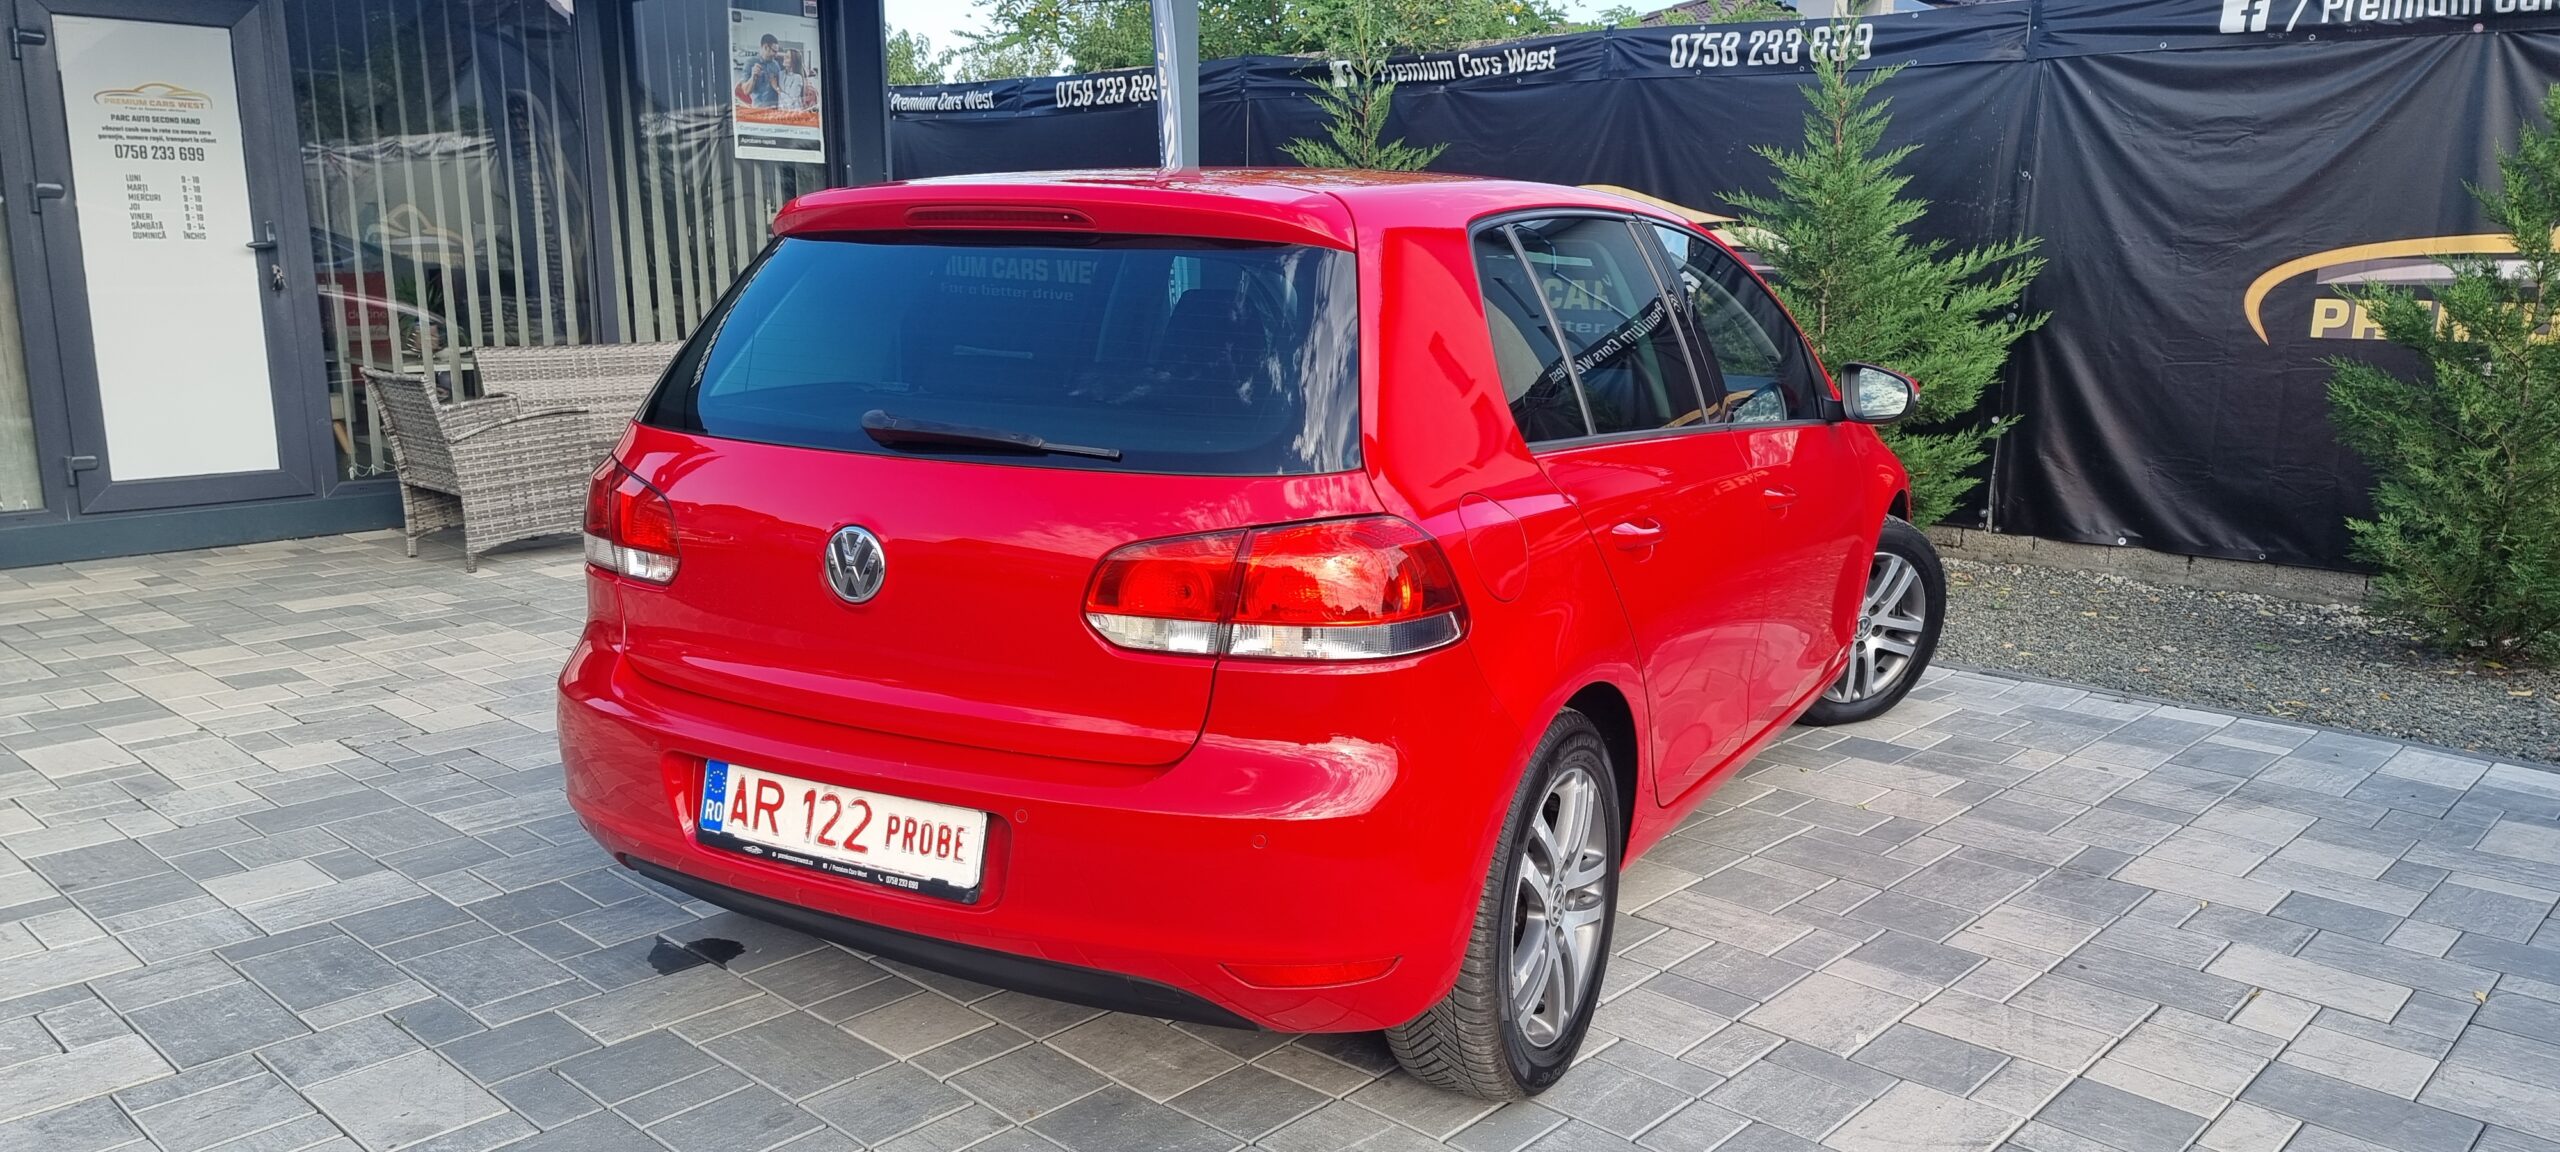 VW GOLF 6, 1.4 BENZINA, 80 CP, EURO 5 AN 2009